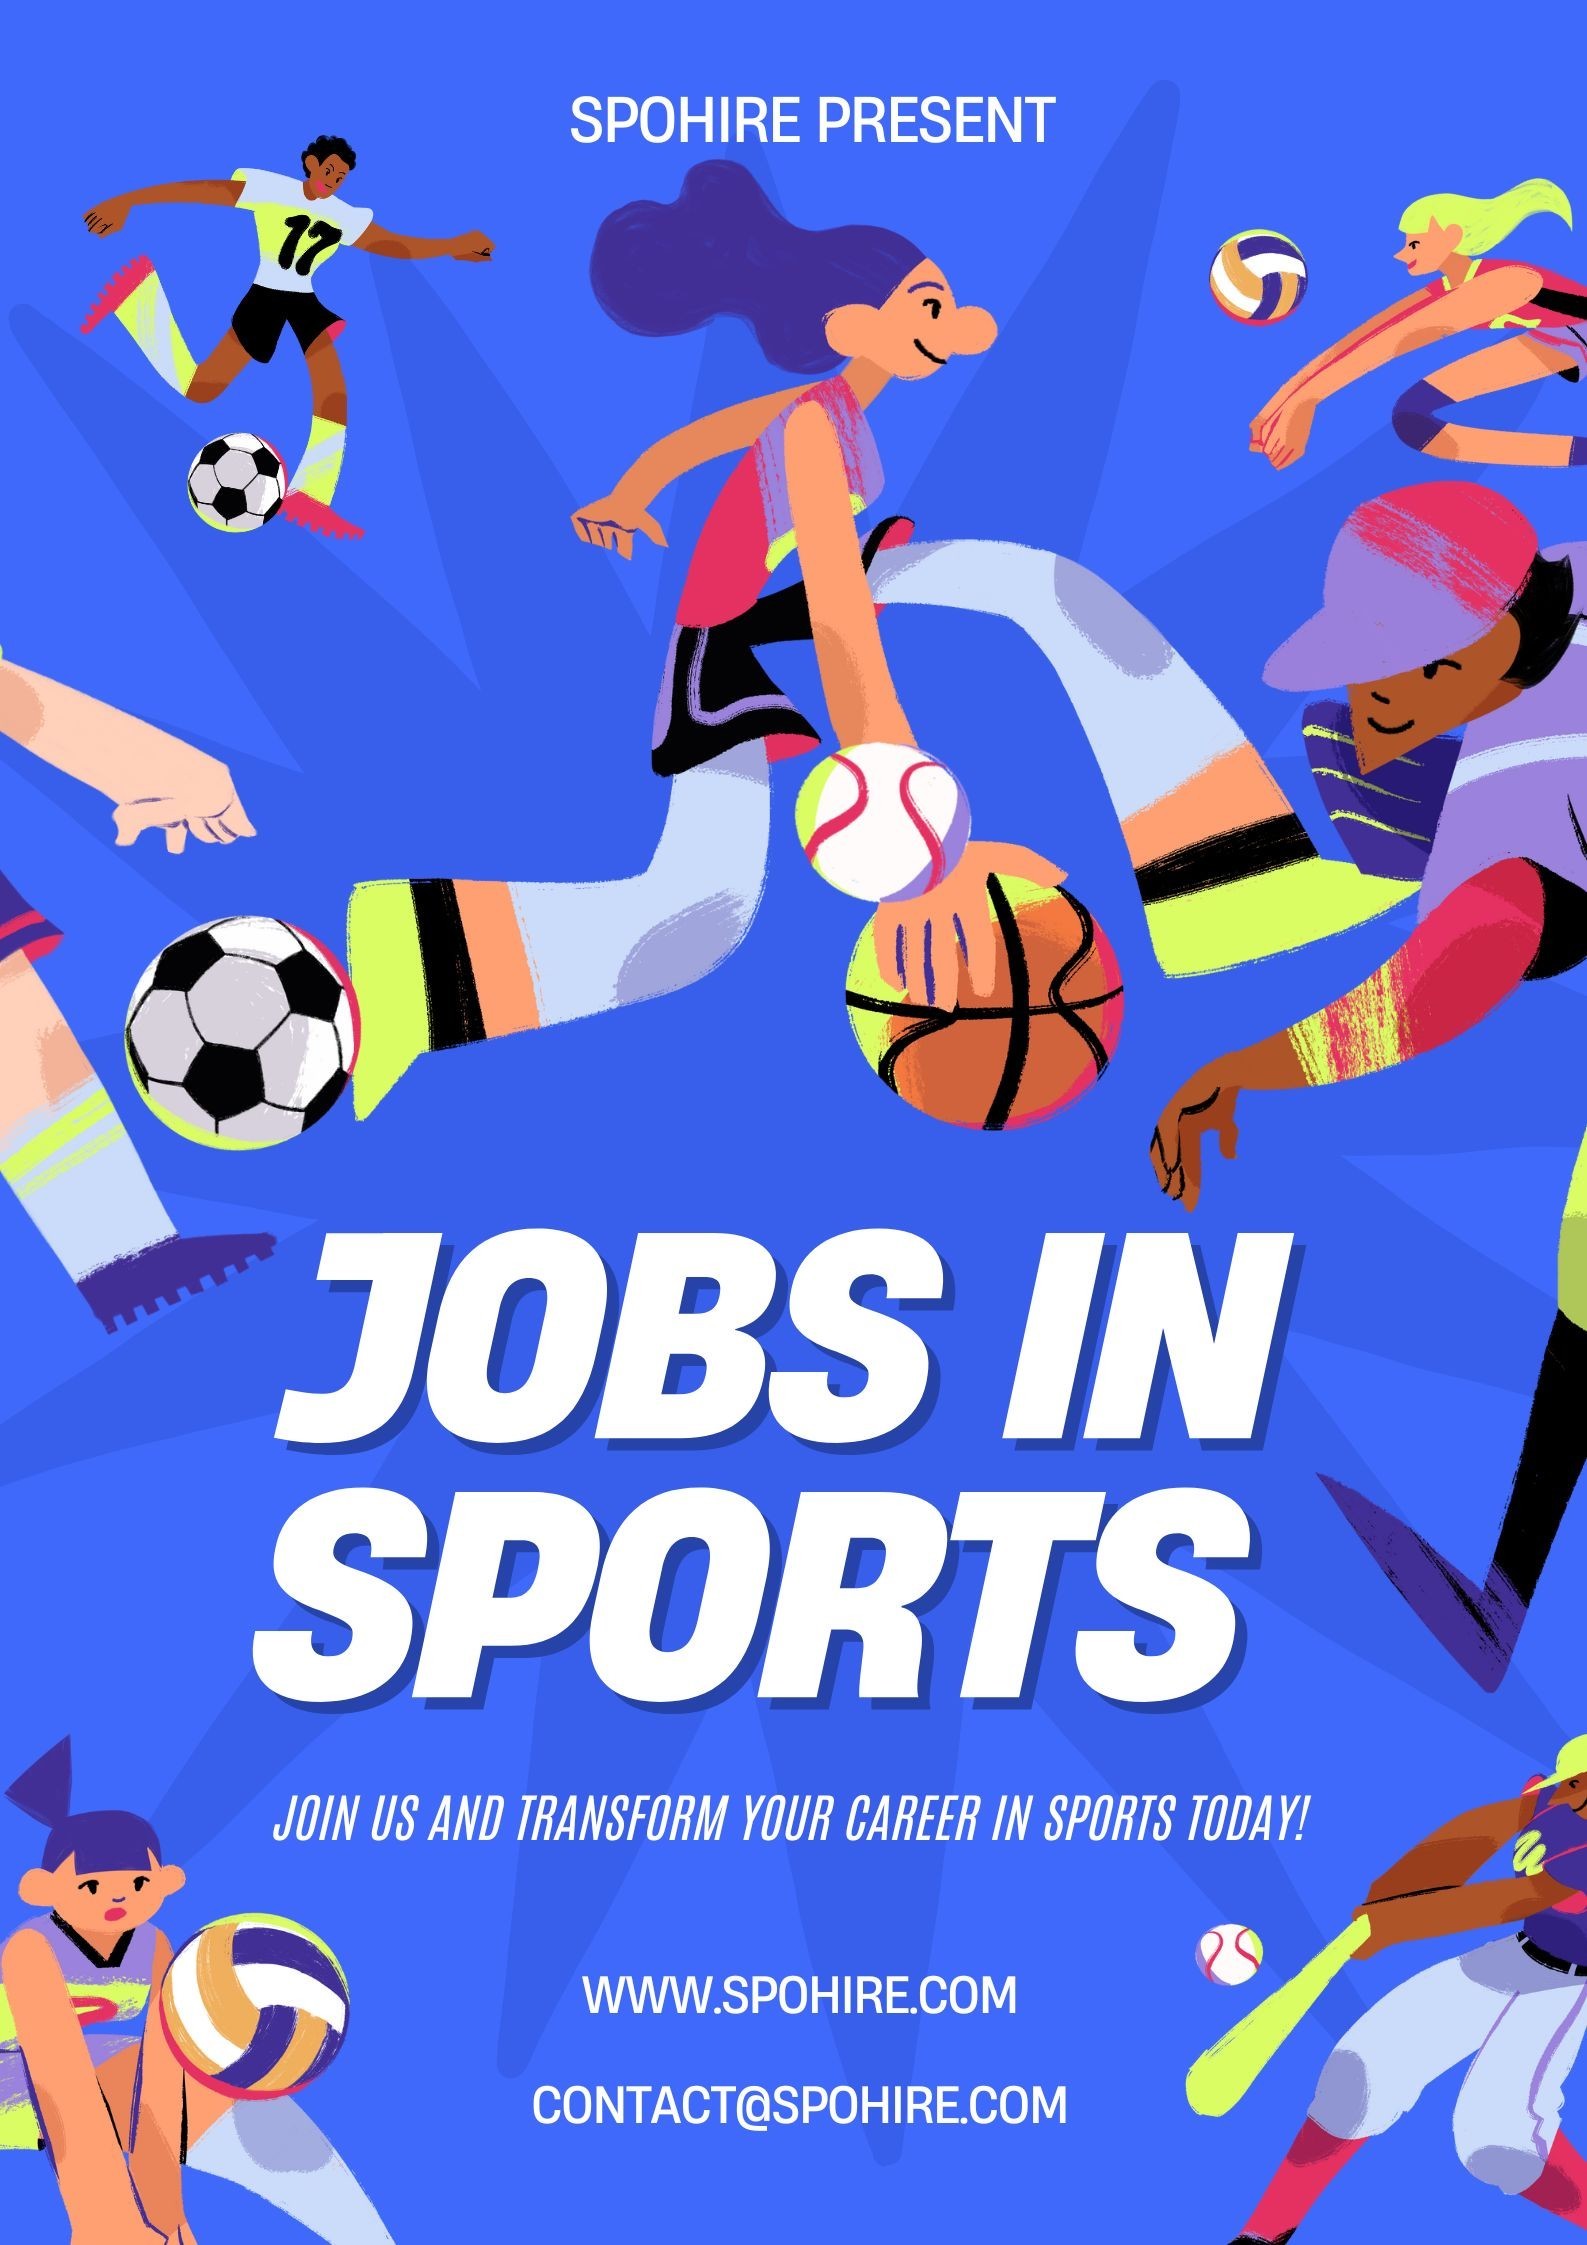 Jobs in sports